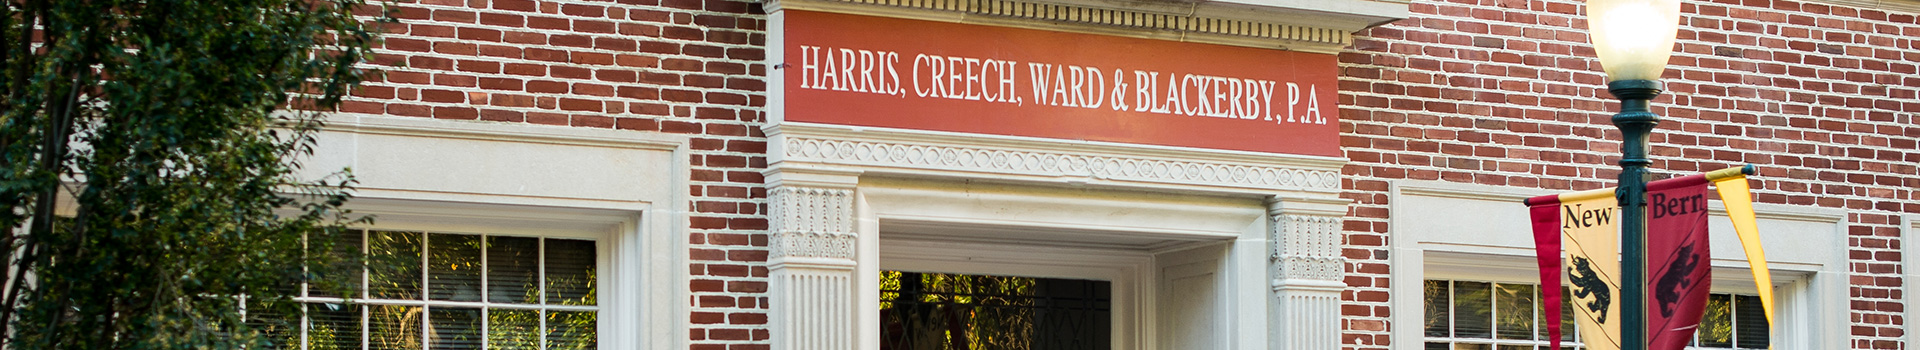 The Harris, Creech, Ward & Blackerby Law Firm